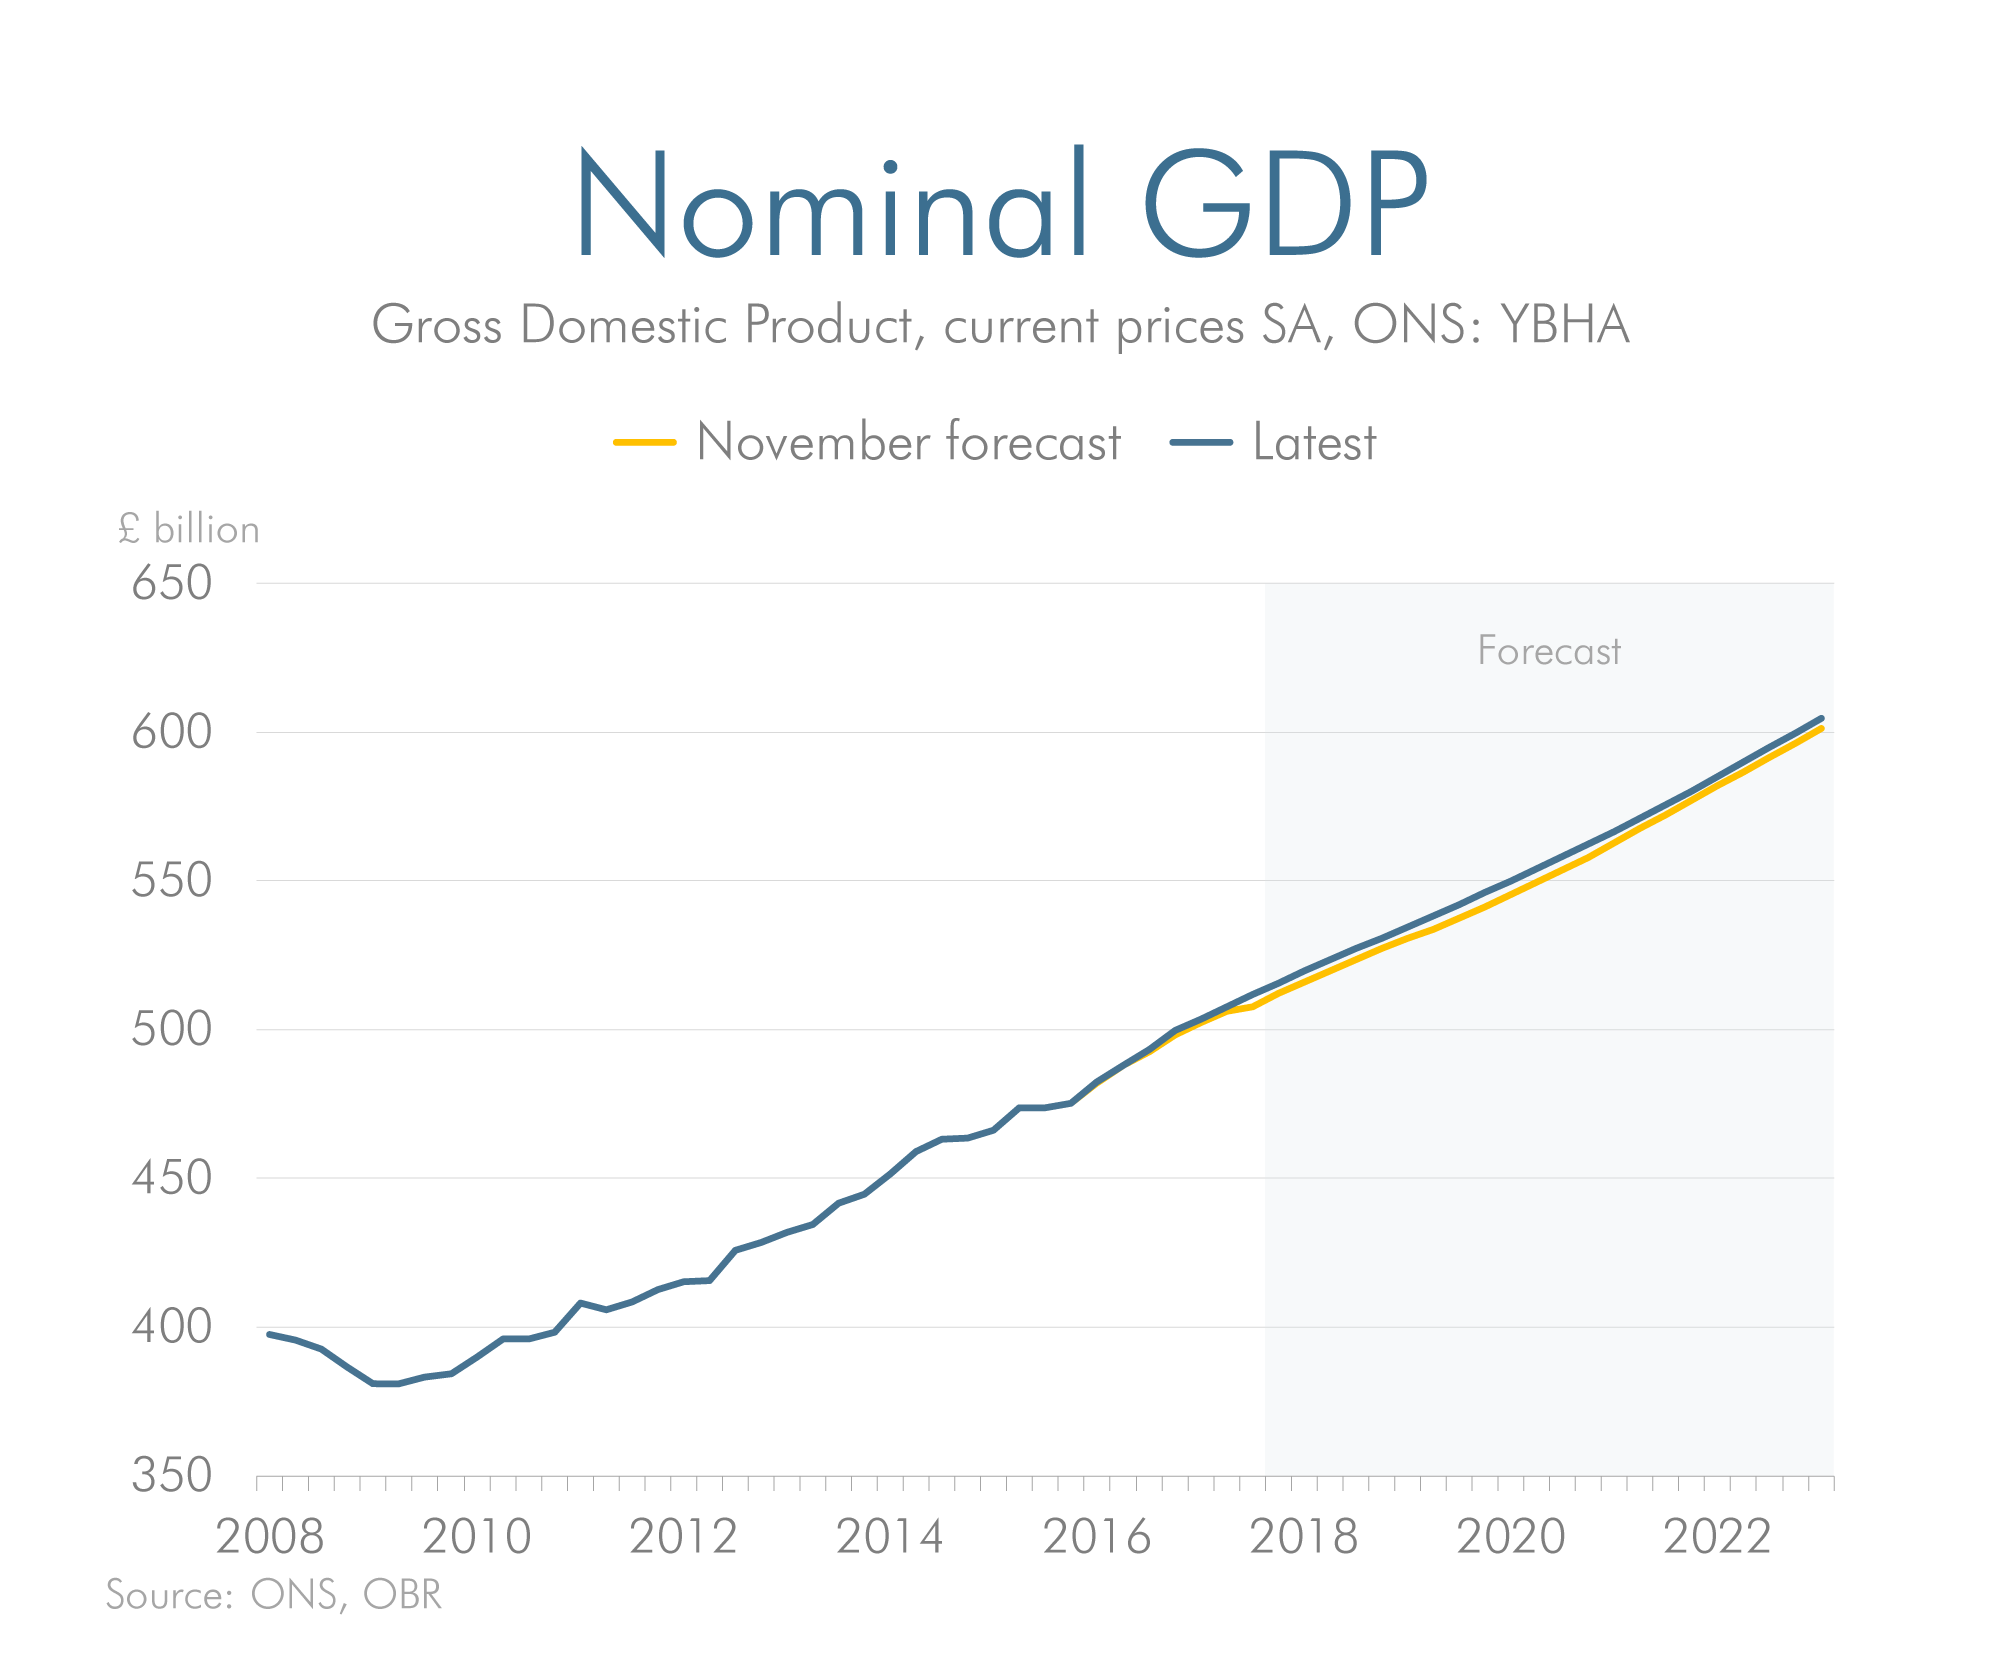 Latest forecast versus previous forecast for nominal GDP